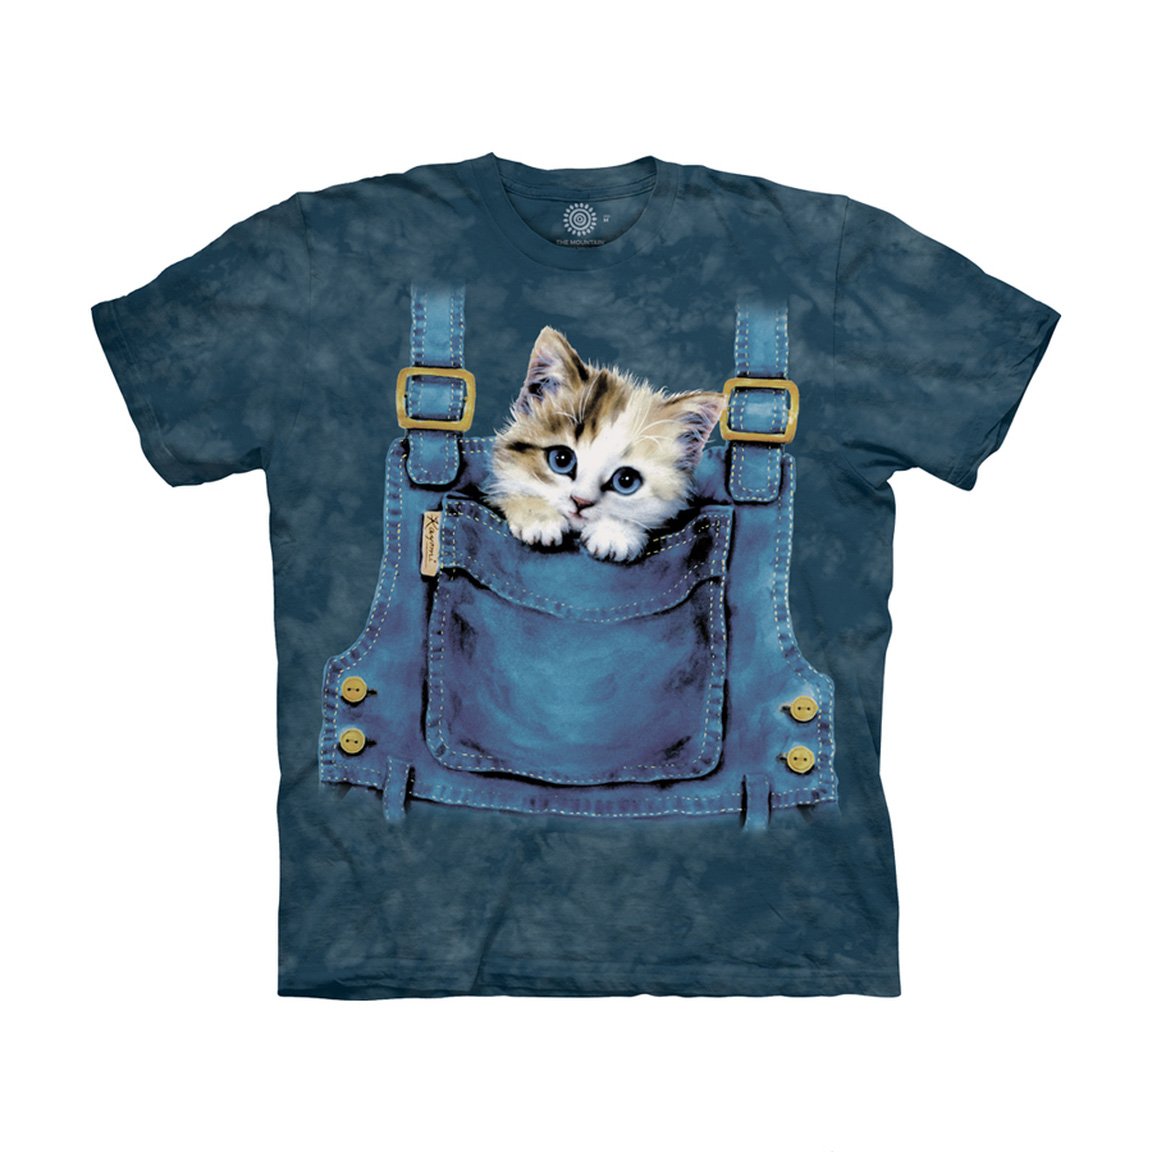 The Mountain Kitty Overalls - Kids' Unisex T-Shirt